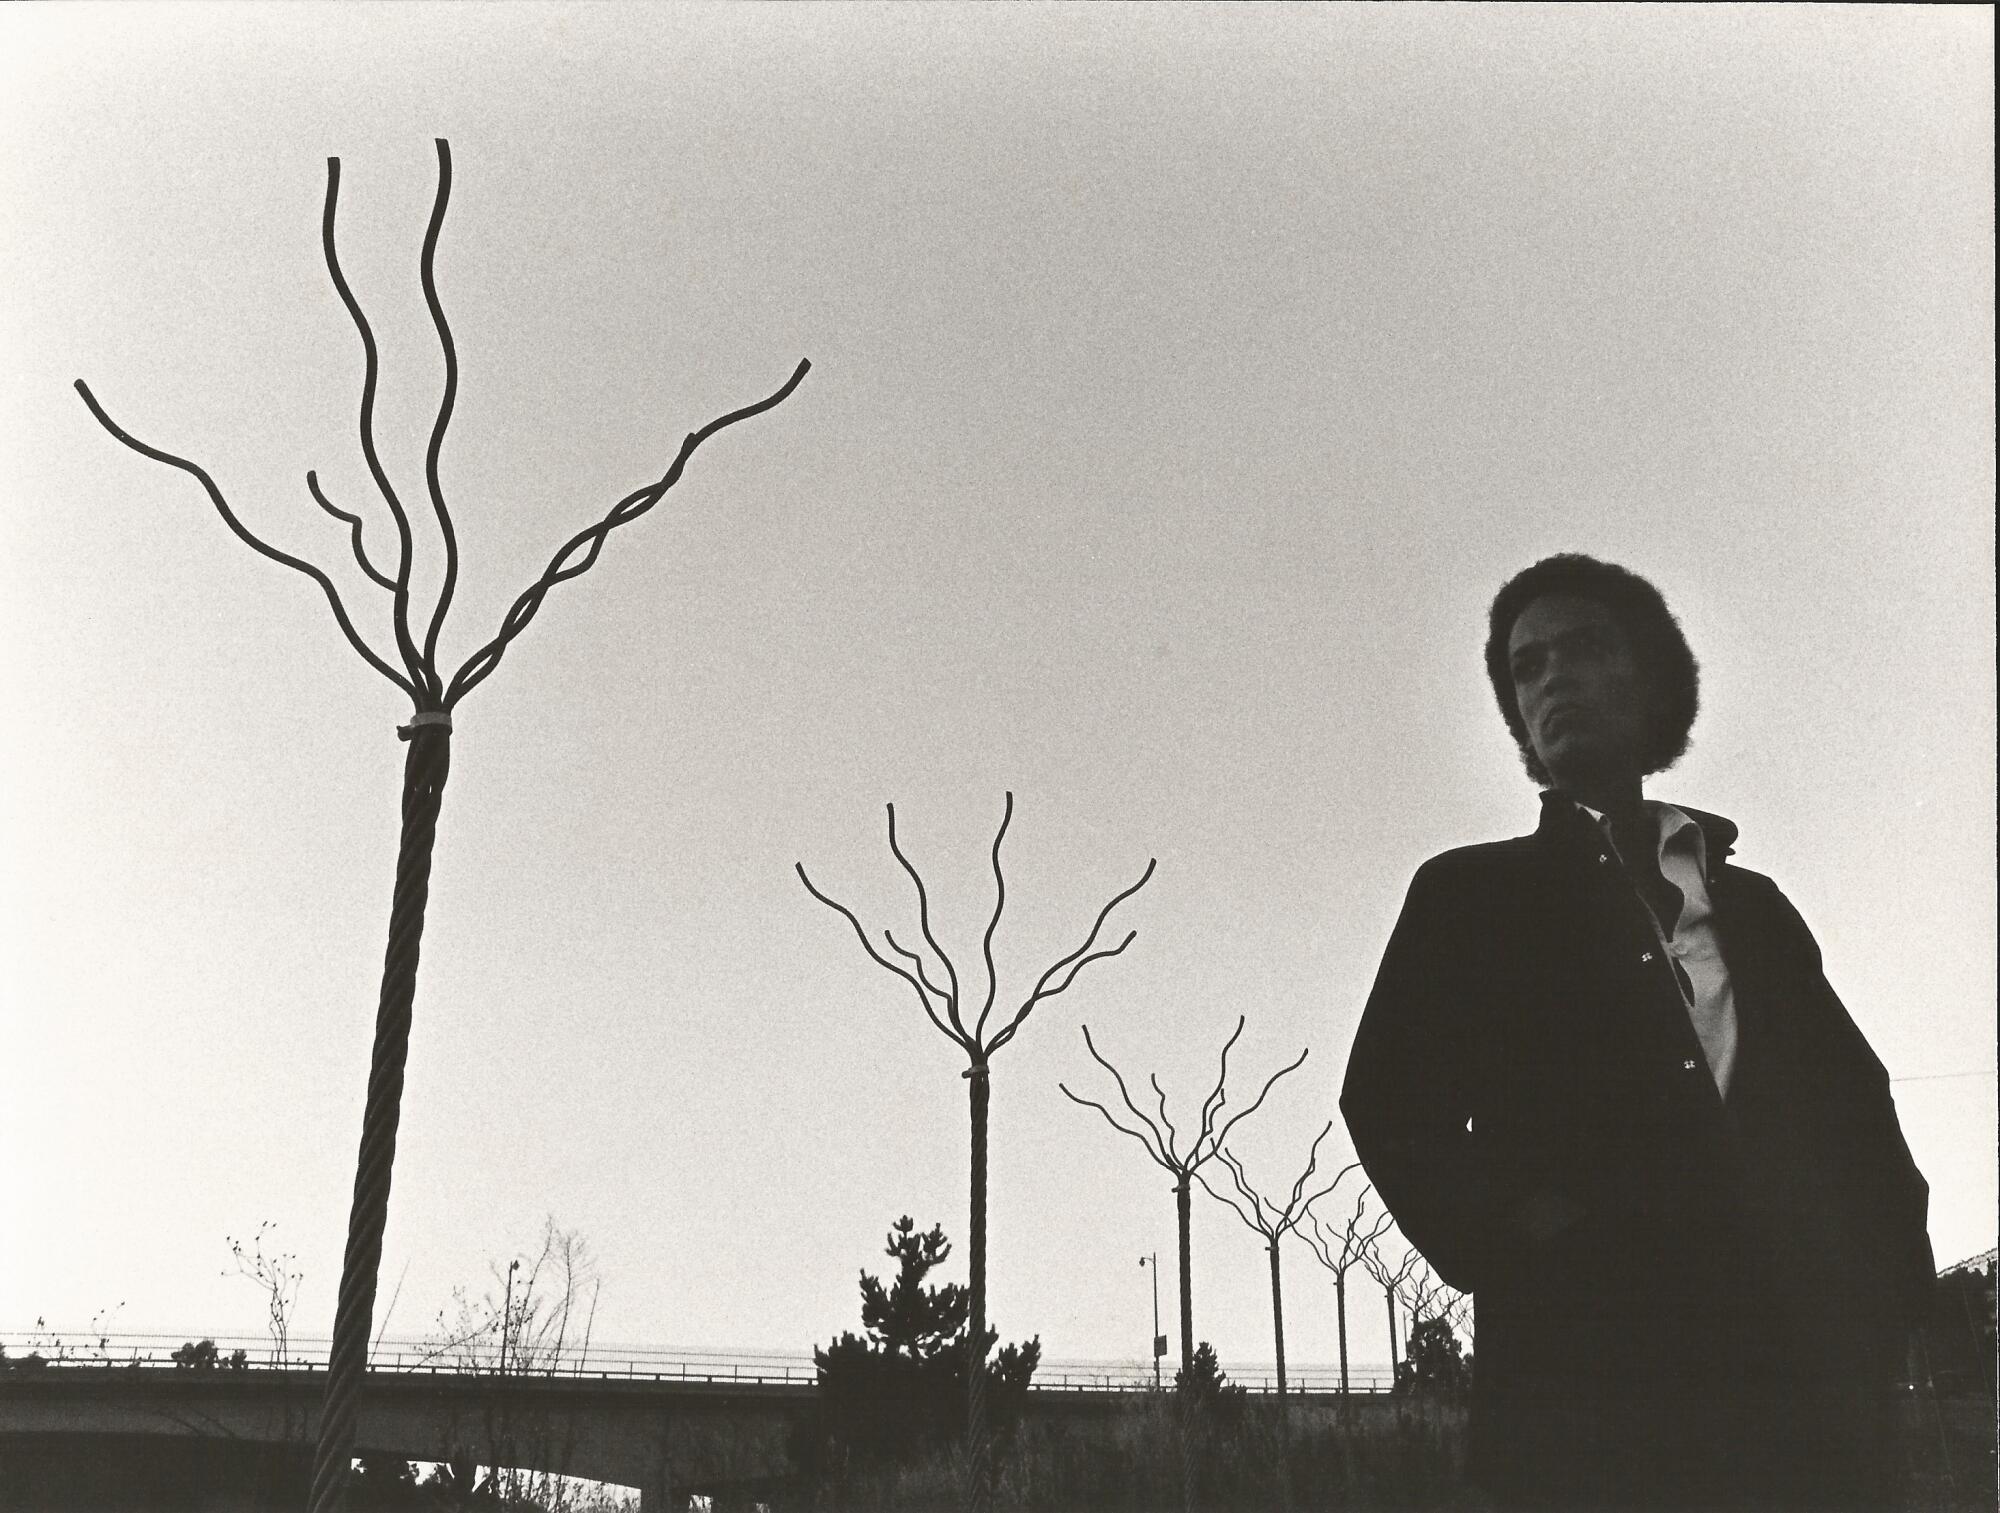 Maren Hasssinger, “Twelve Trees #2,” (Documentation Photograph), 1979, Black and white photograph